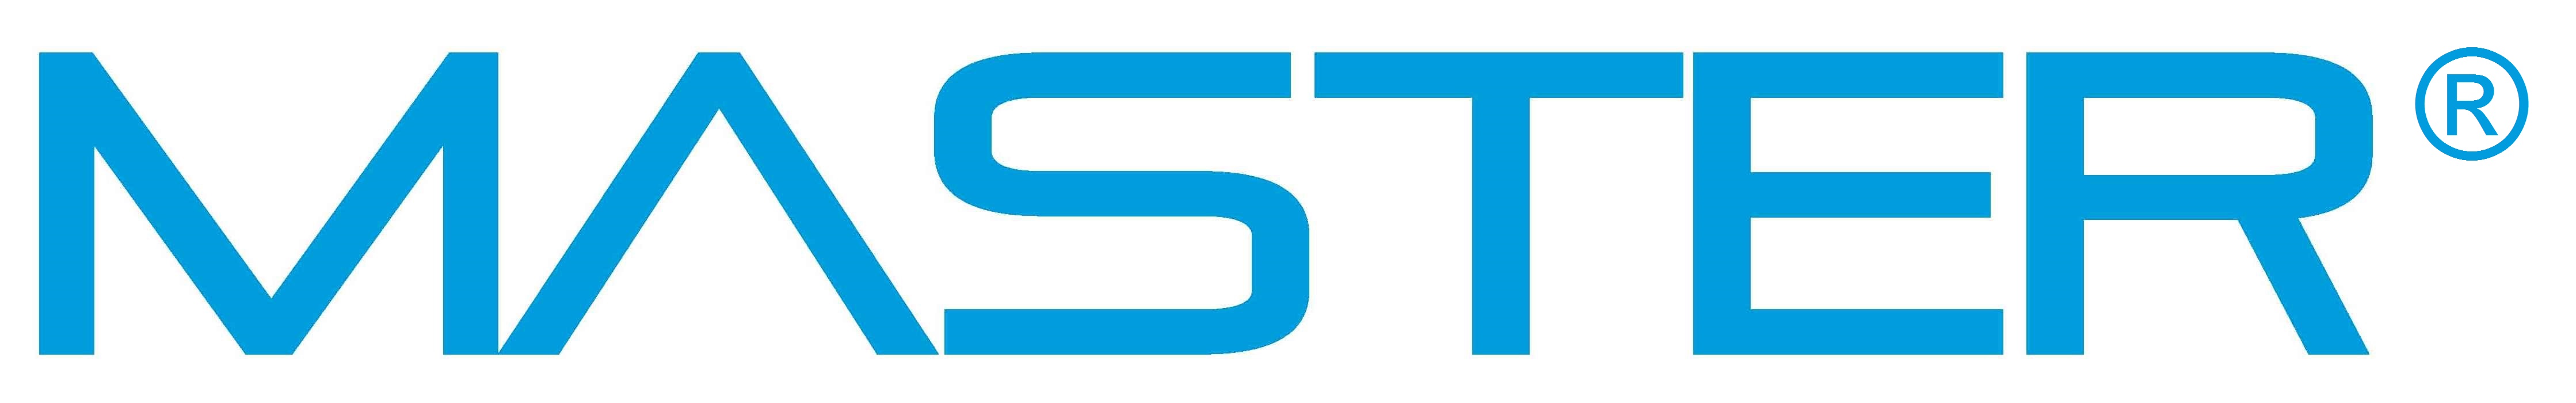 Master brand logo